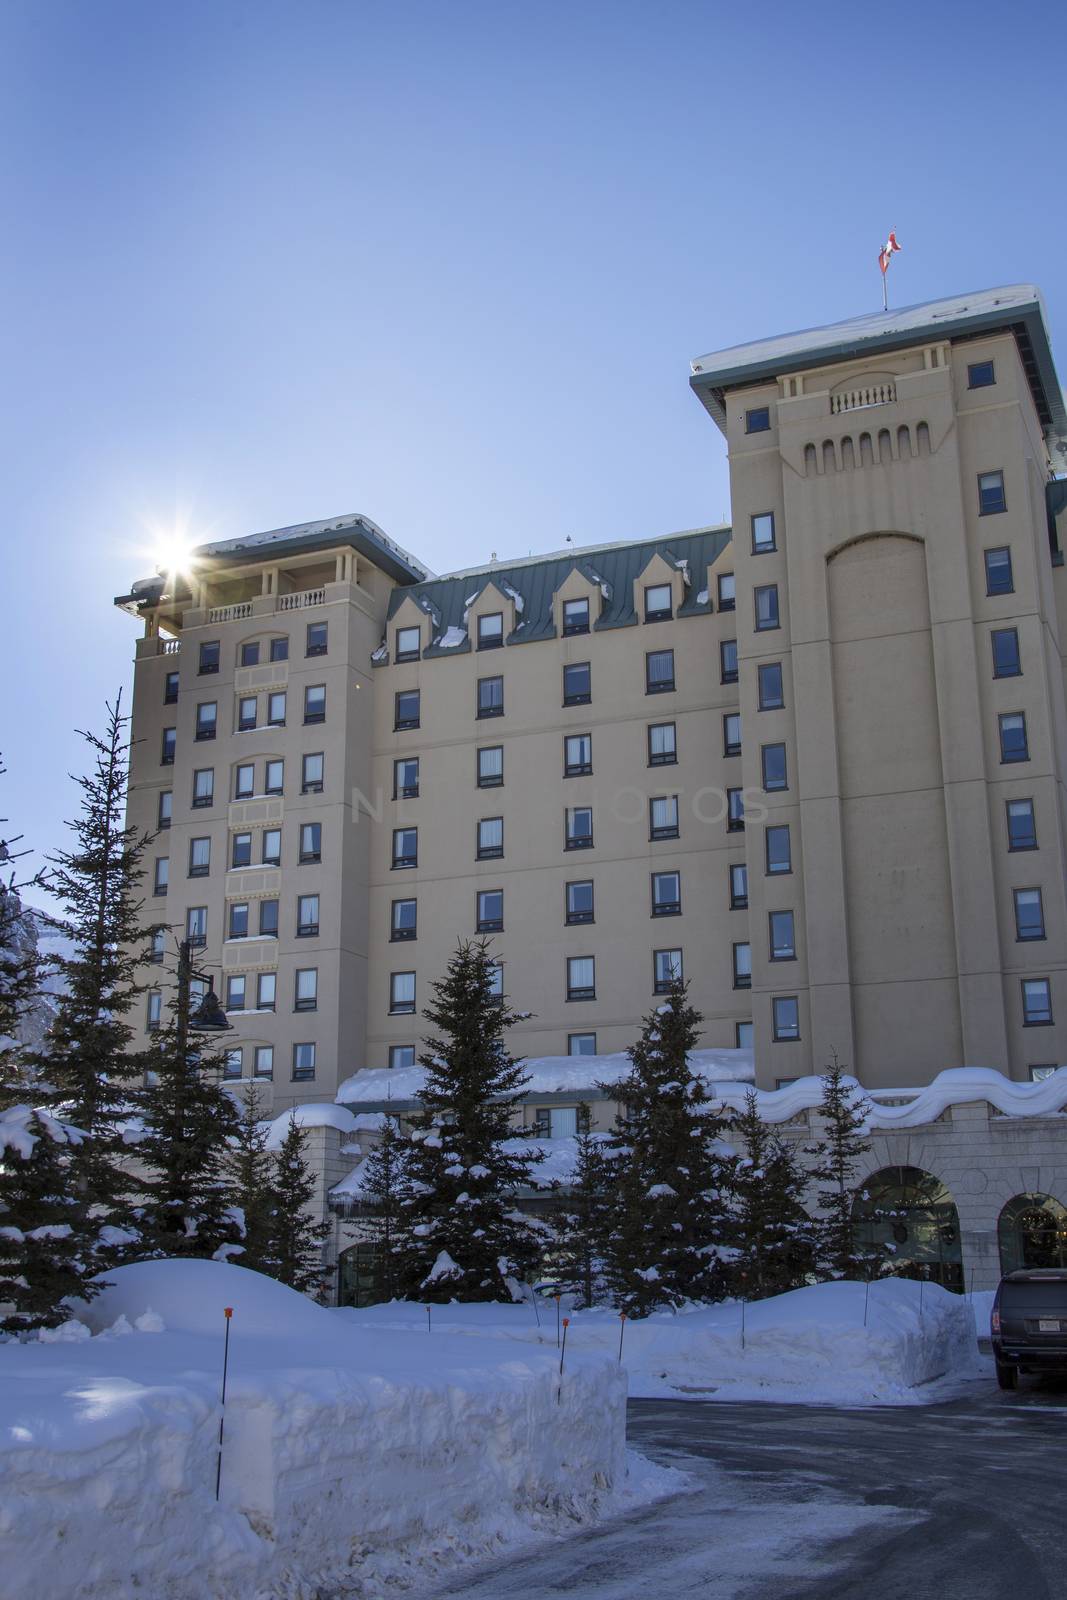 Chateau Lake Louise Hotel Alberta Canada Winter